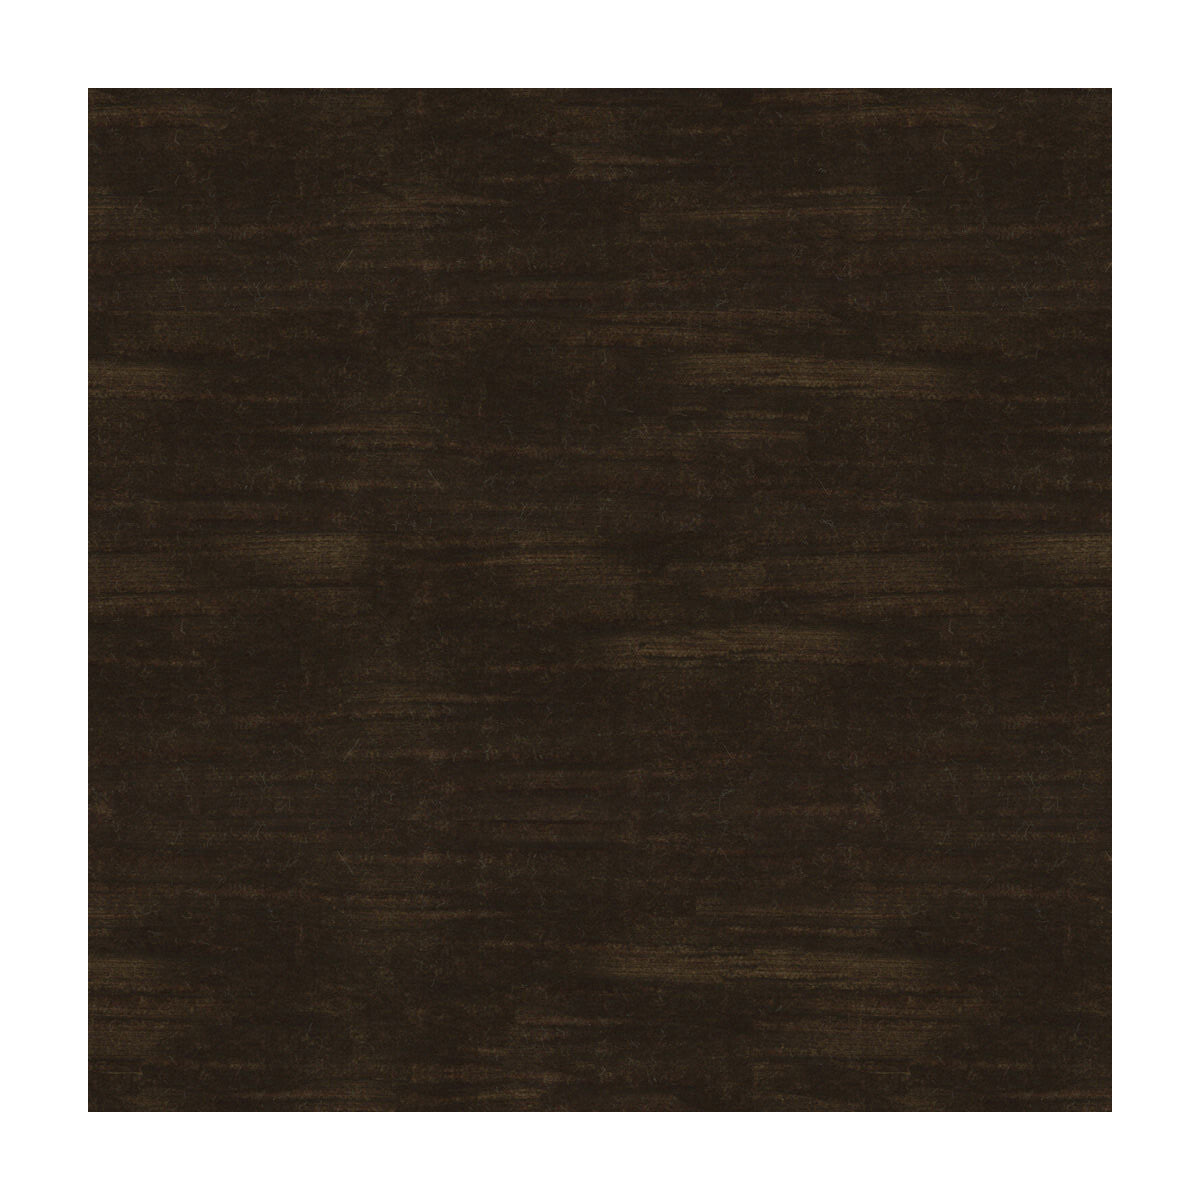 Lazare Velvet fabric in brown color - pattern 8016103.6.0 - by Brunschwig &amp; Fils